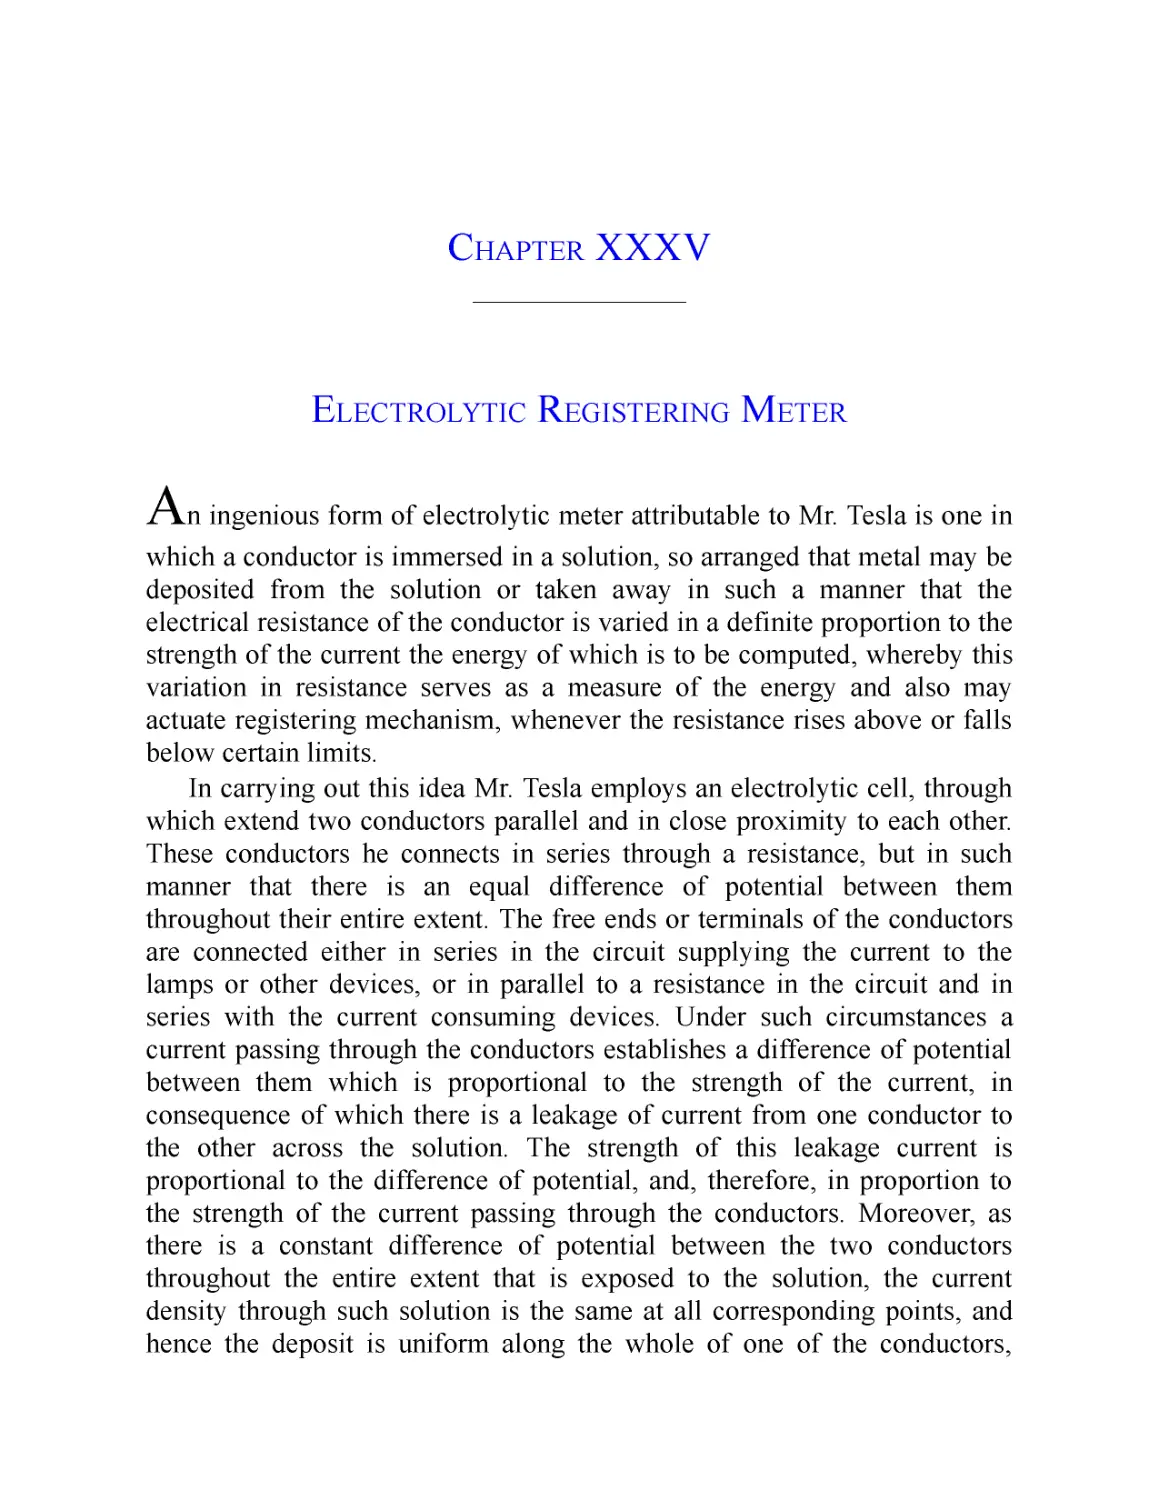 ﻿Chapter XXXV: Electrolytic Registering Mete